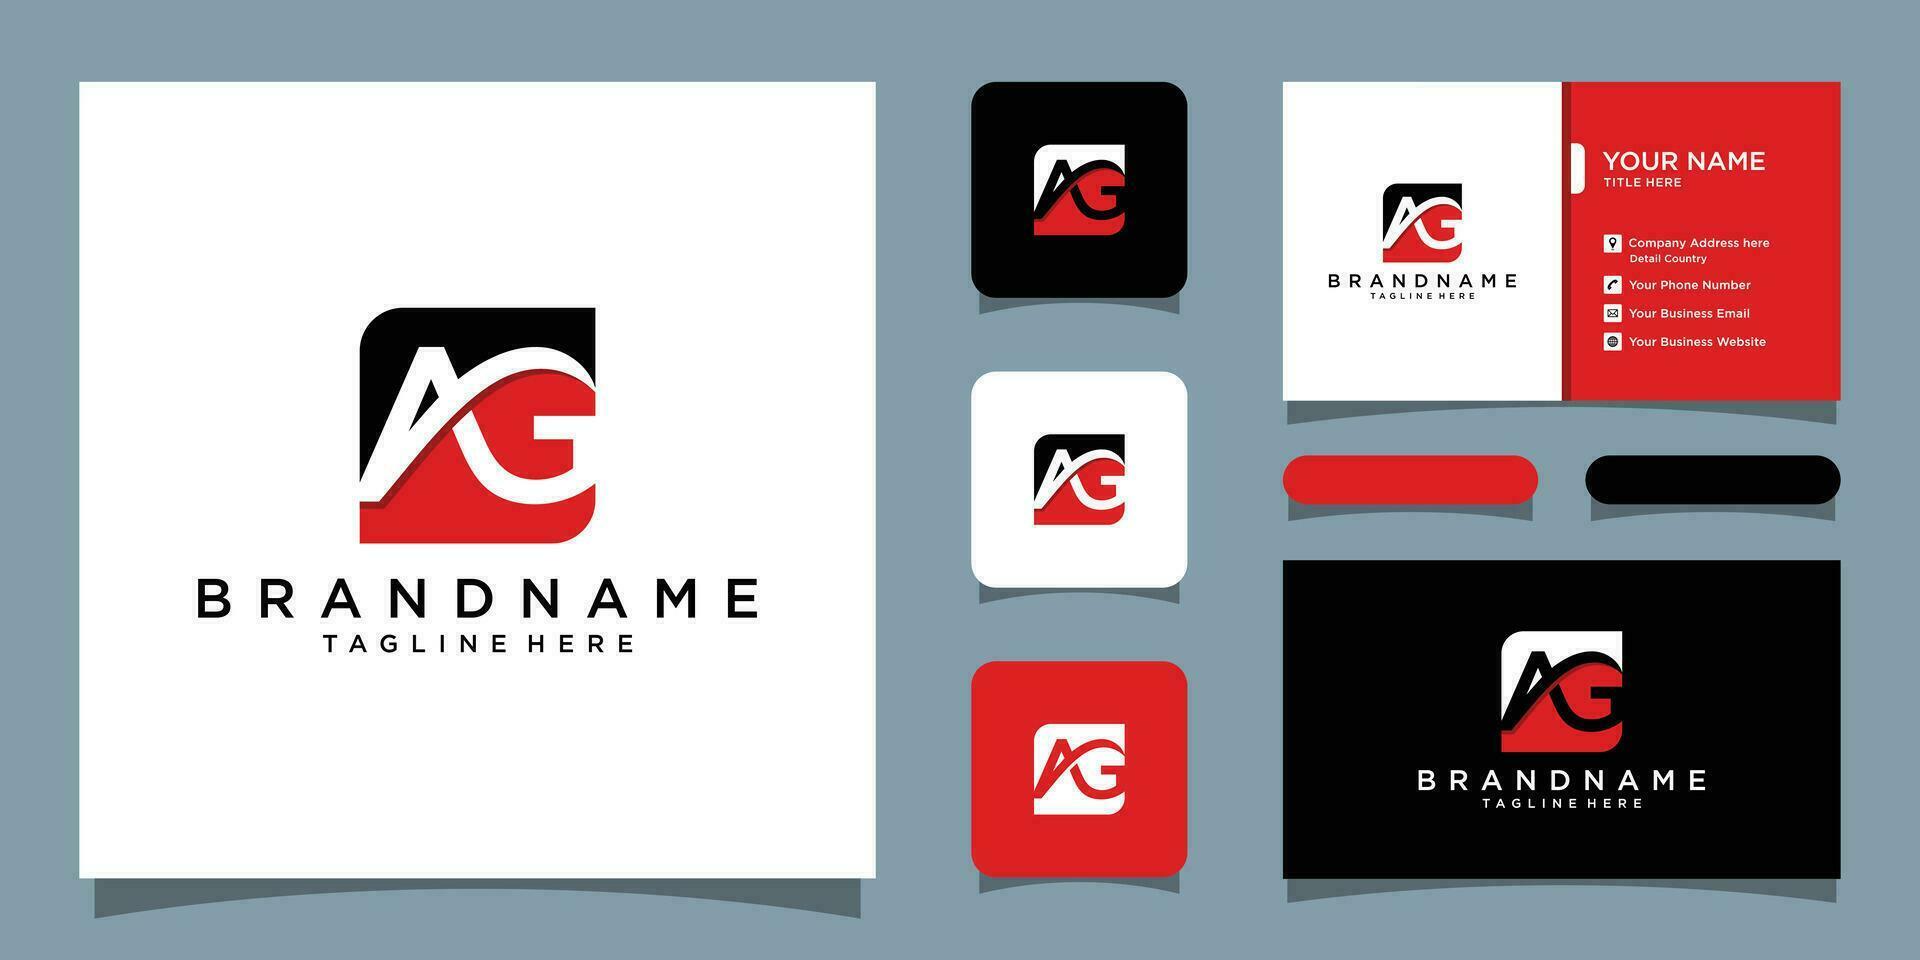 Initiale ag Logo Design mit Geschäft Karte Design Prämie Vektor